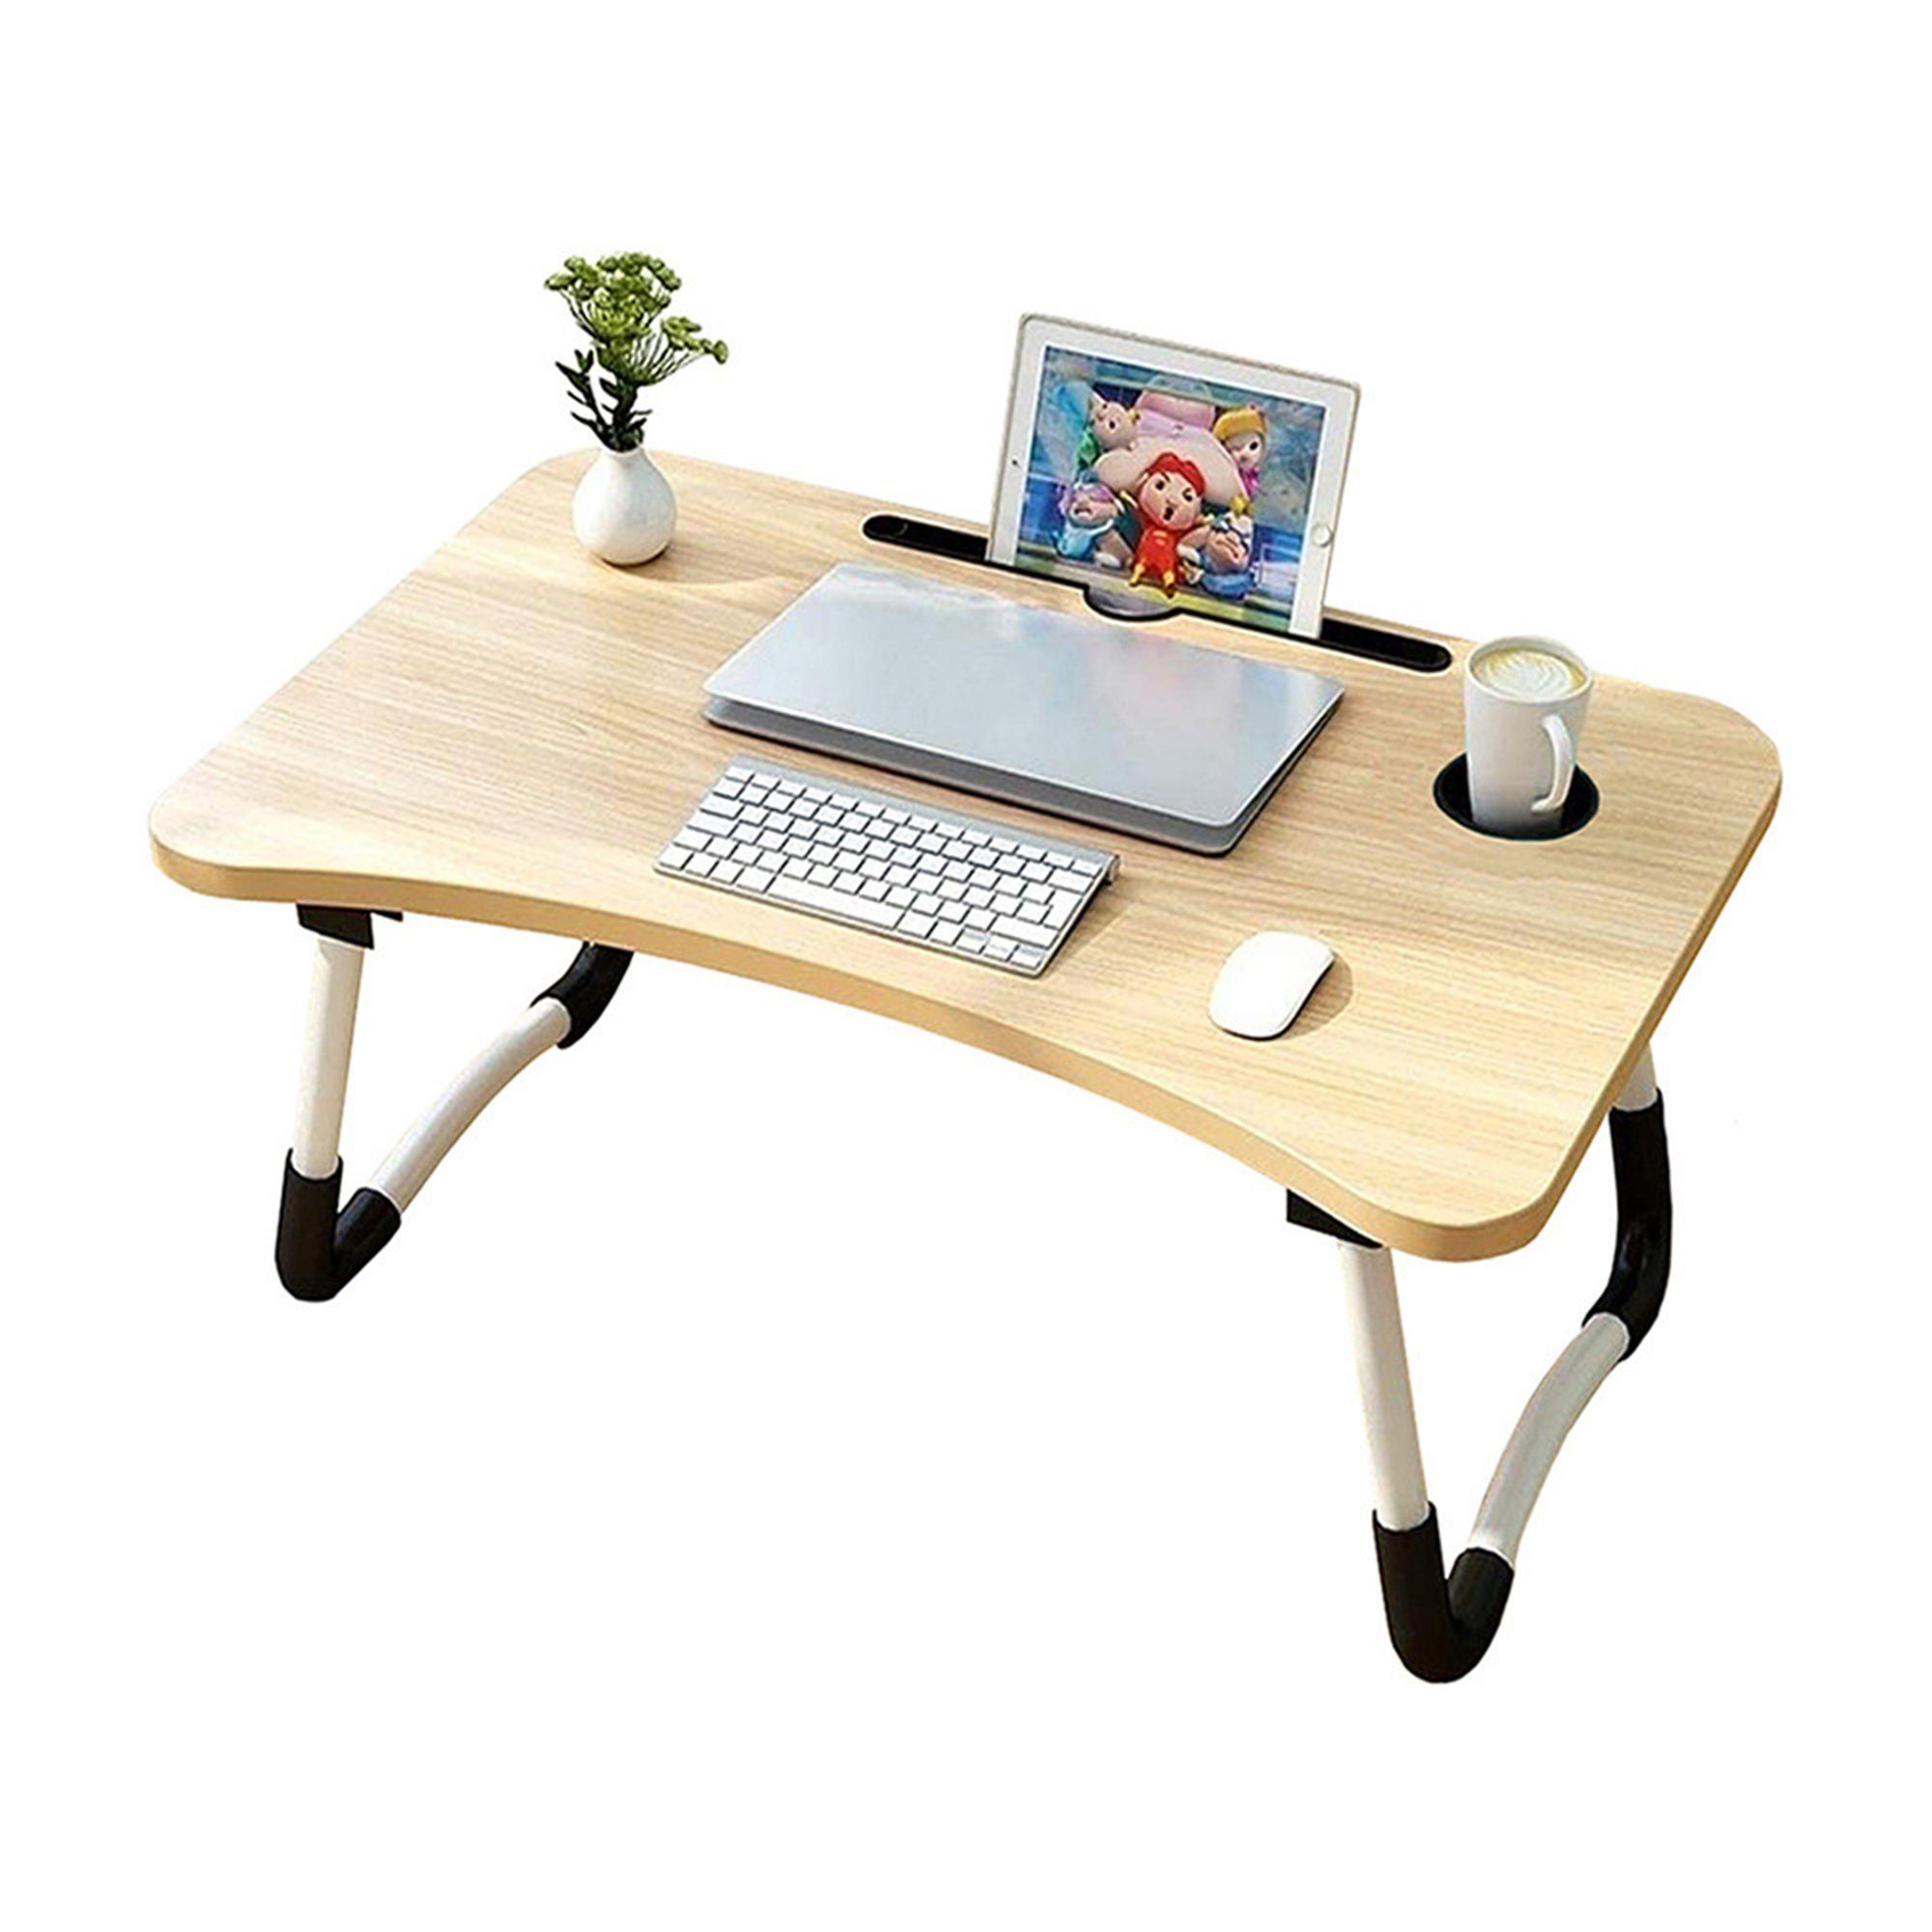 TSB Laptoptisch Laptop, Faltbar Tisch Bett, Notebooktisch Beistell, Betttisch Laptoptisch Werk Tablet,